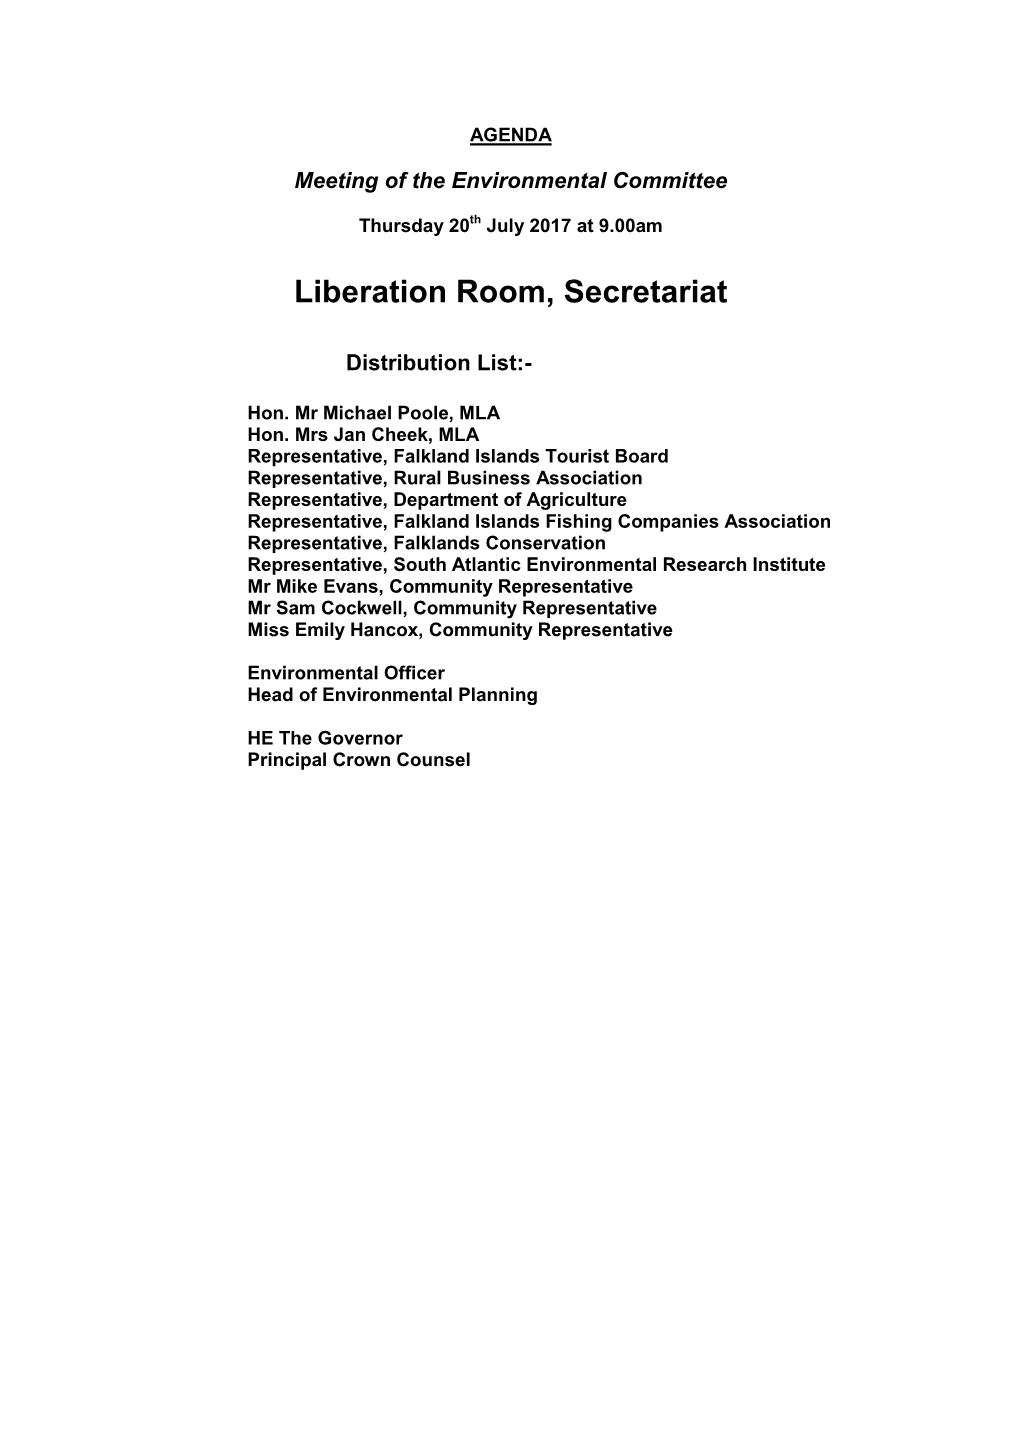 Liberation Room, Secretariat